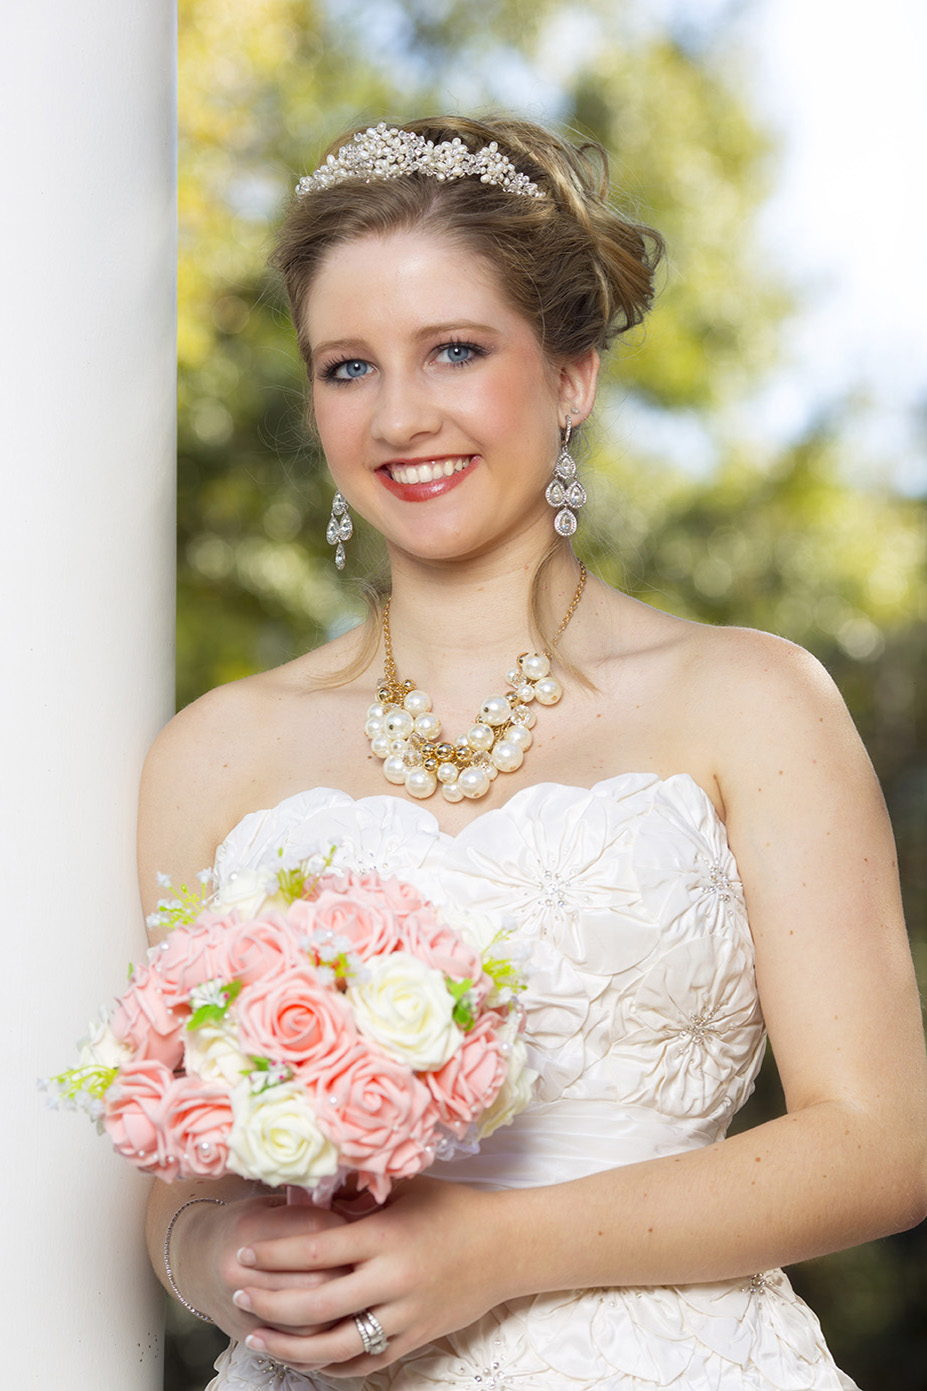 bridge posing in white wedding dress with flowers in hand